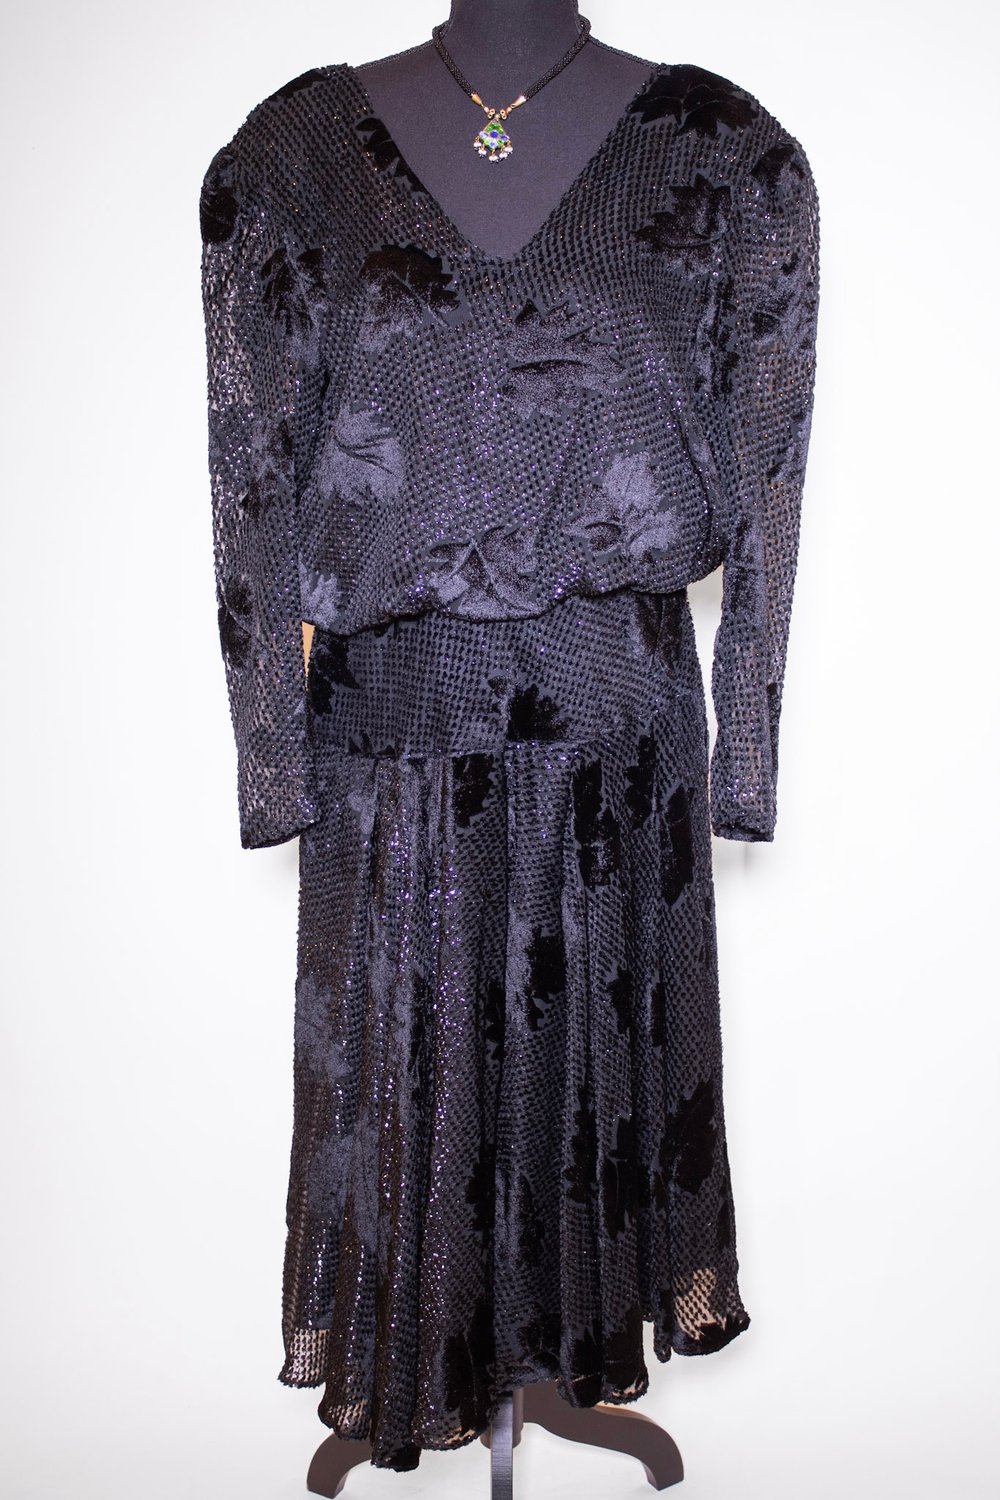 Image of The Silk Farm Dress - Size 8